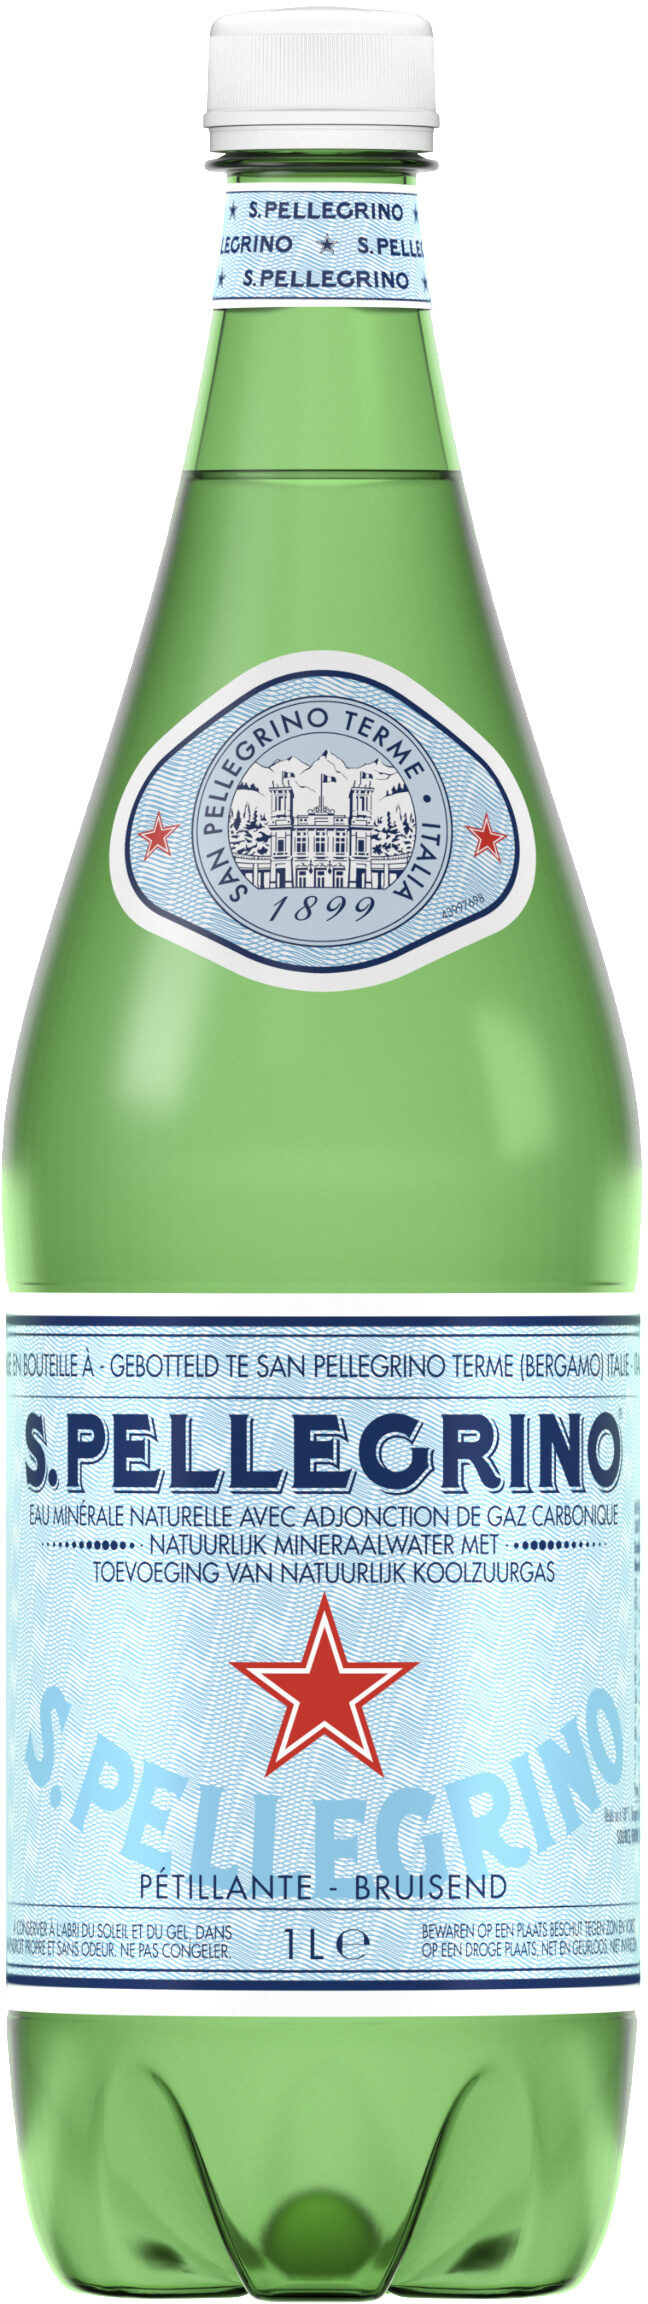 S. Pellegrino Water - Producto - en